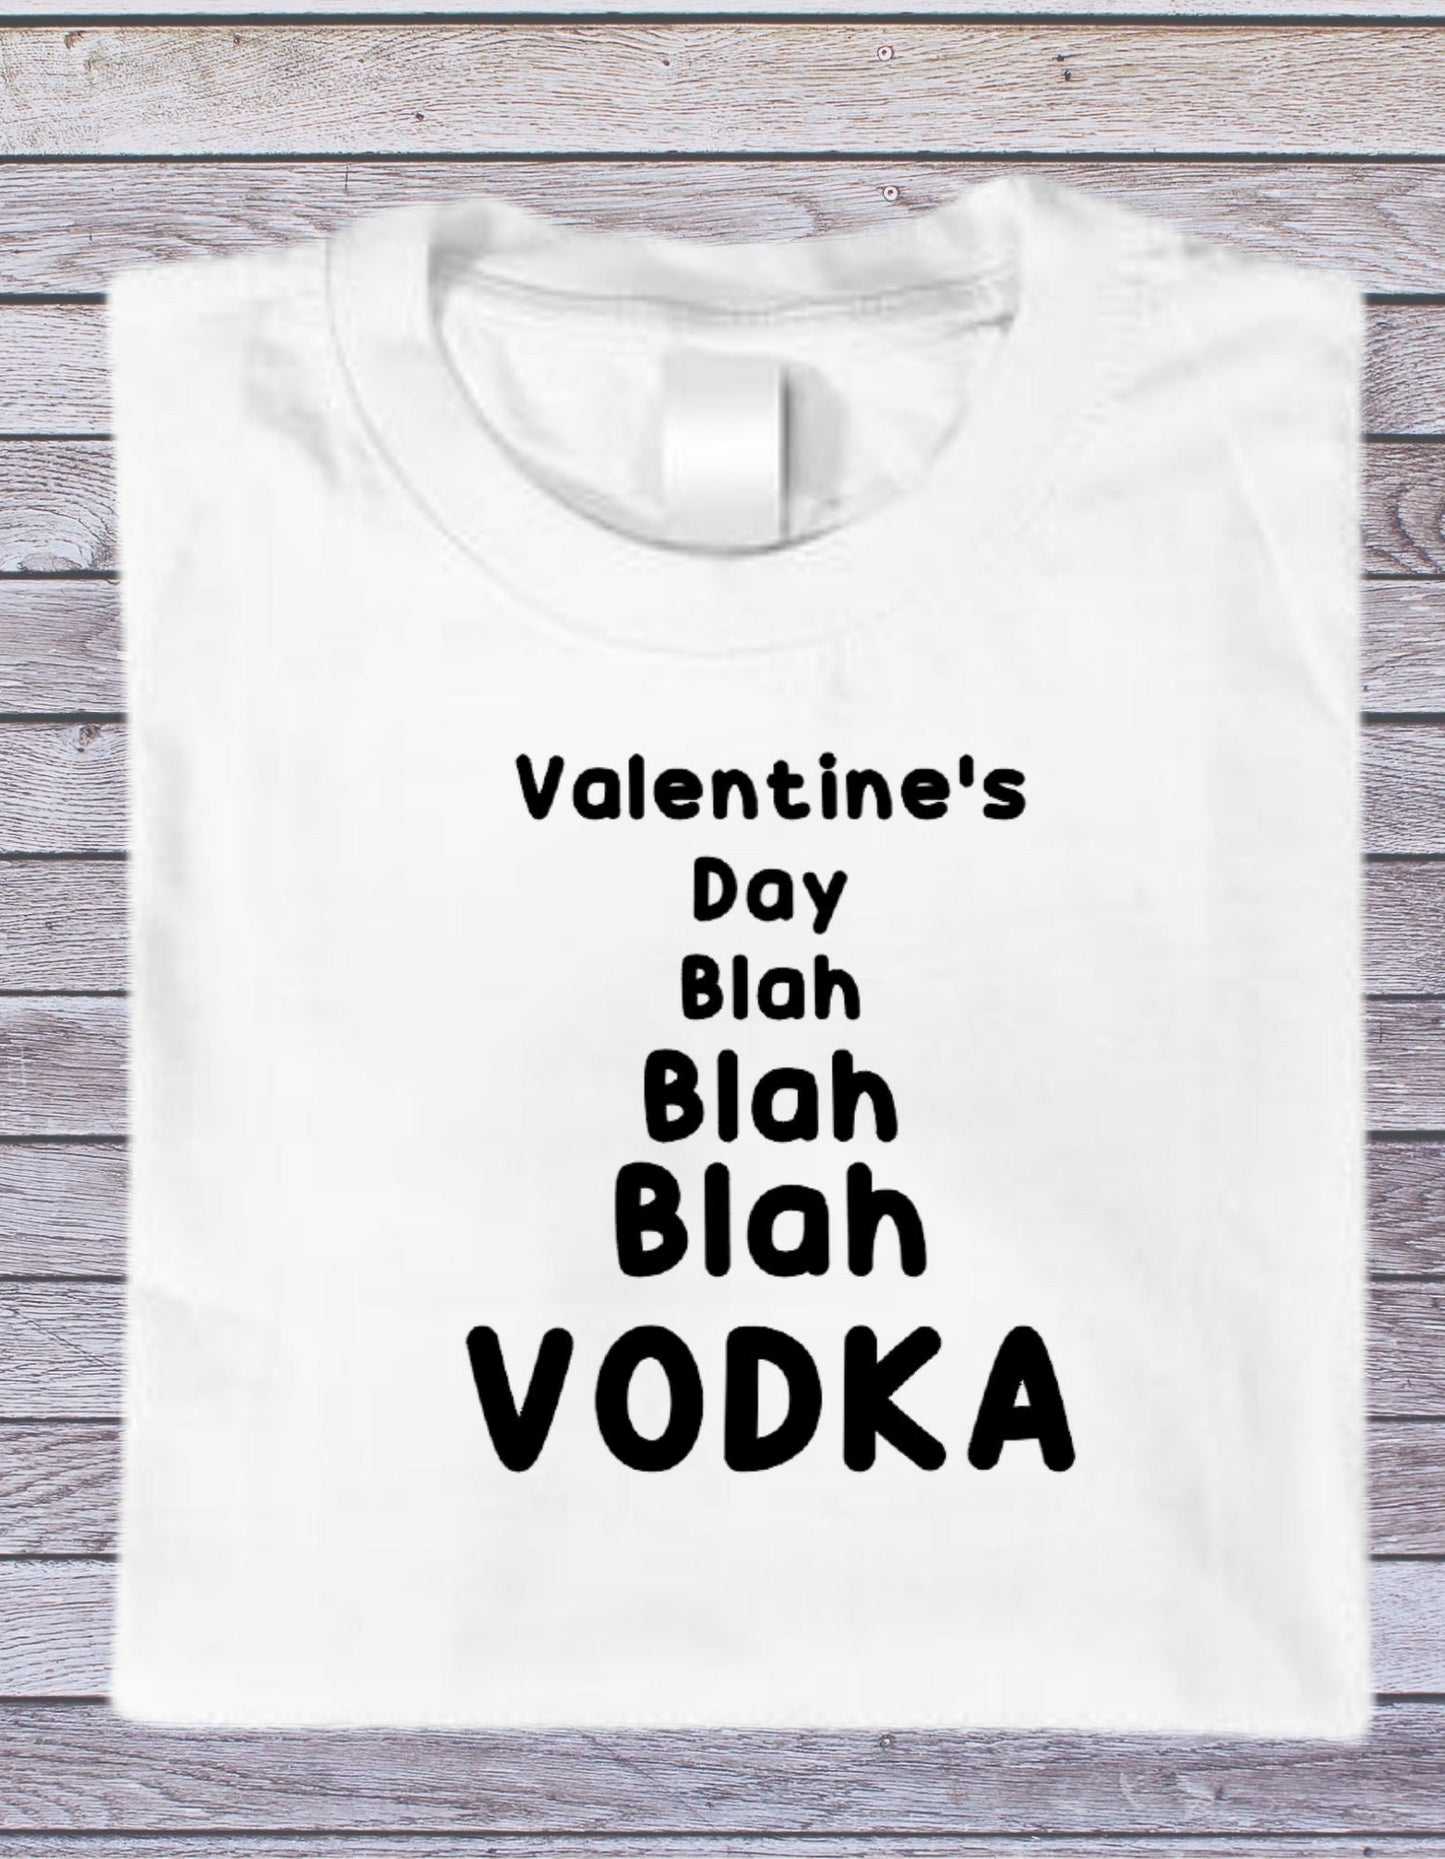 Valentine's Day Blah Blah Blah VODKA! Single on Sweetheart day t-shirt hoodie sweatshirt funny Valentine best seller most popular